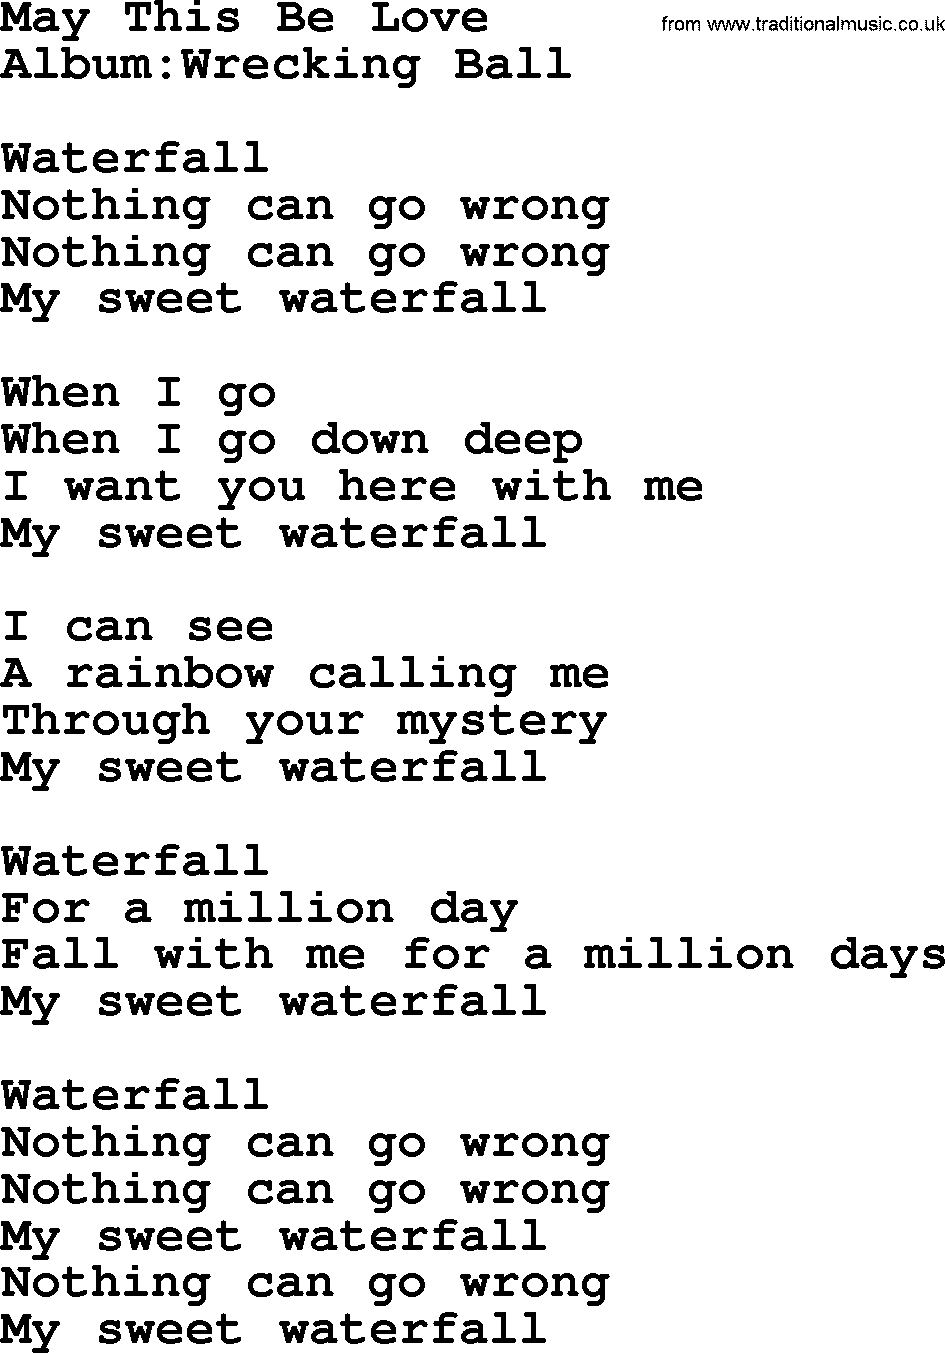 Emmylou Harris song: May This Be Love lyrics